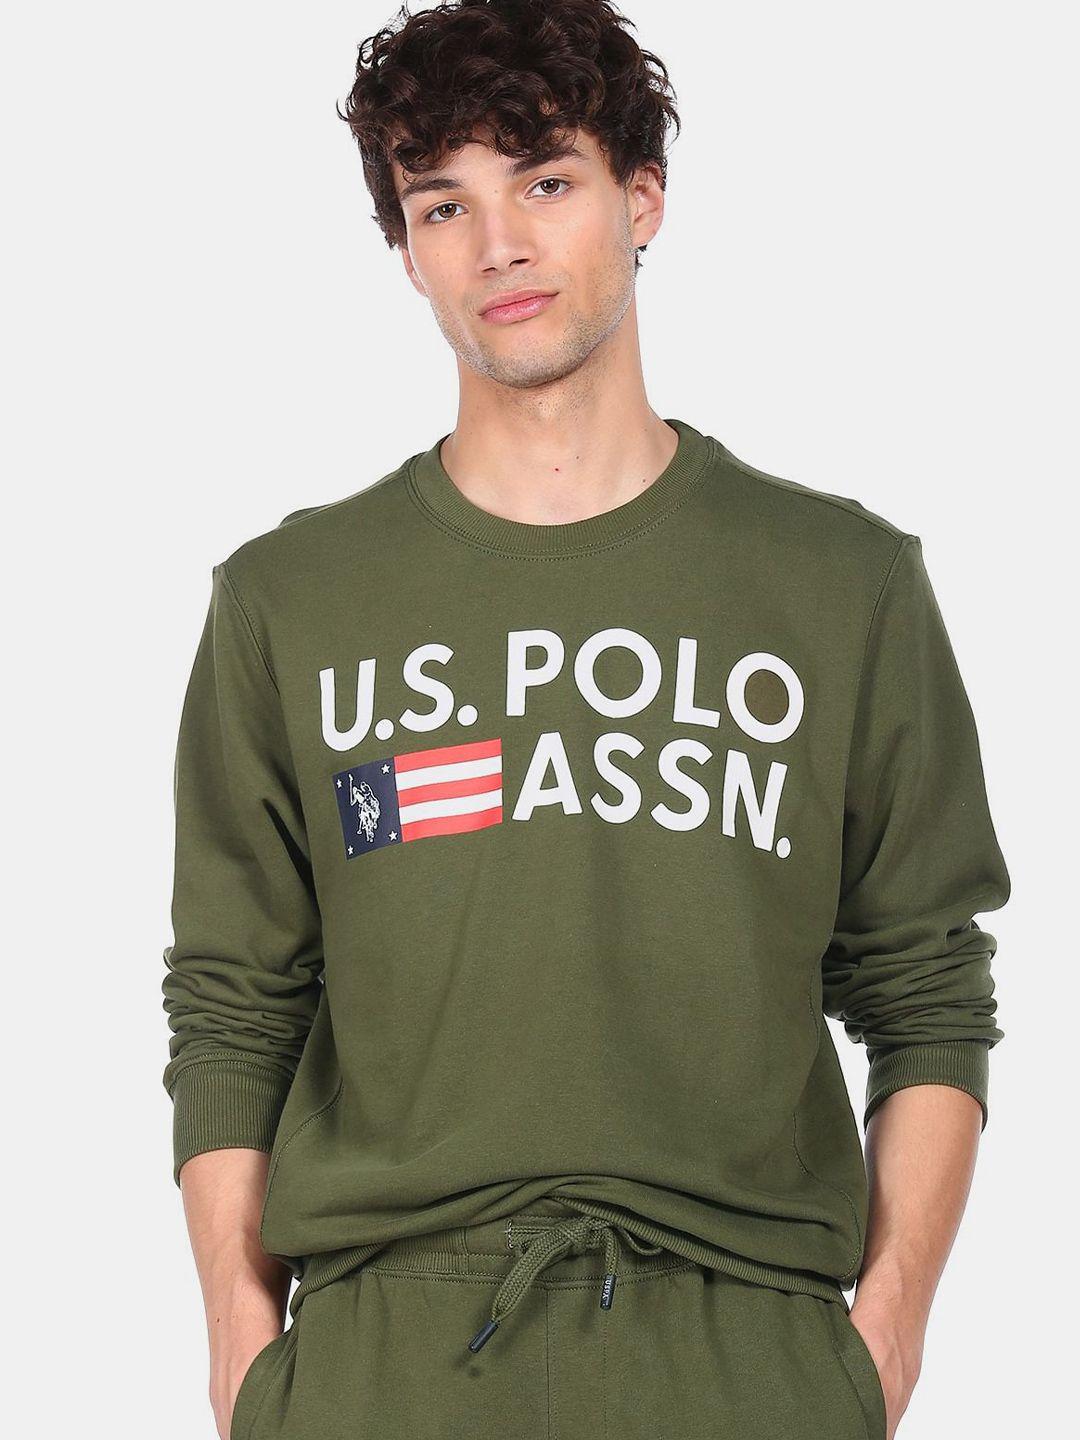 u.s.-polo-assn.-denim-co.-men-green-printed-sweatshirt